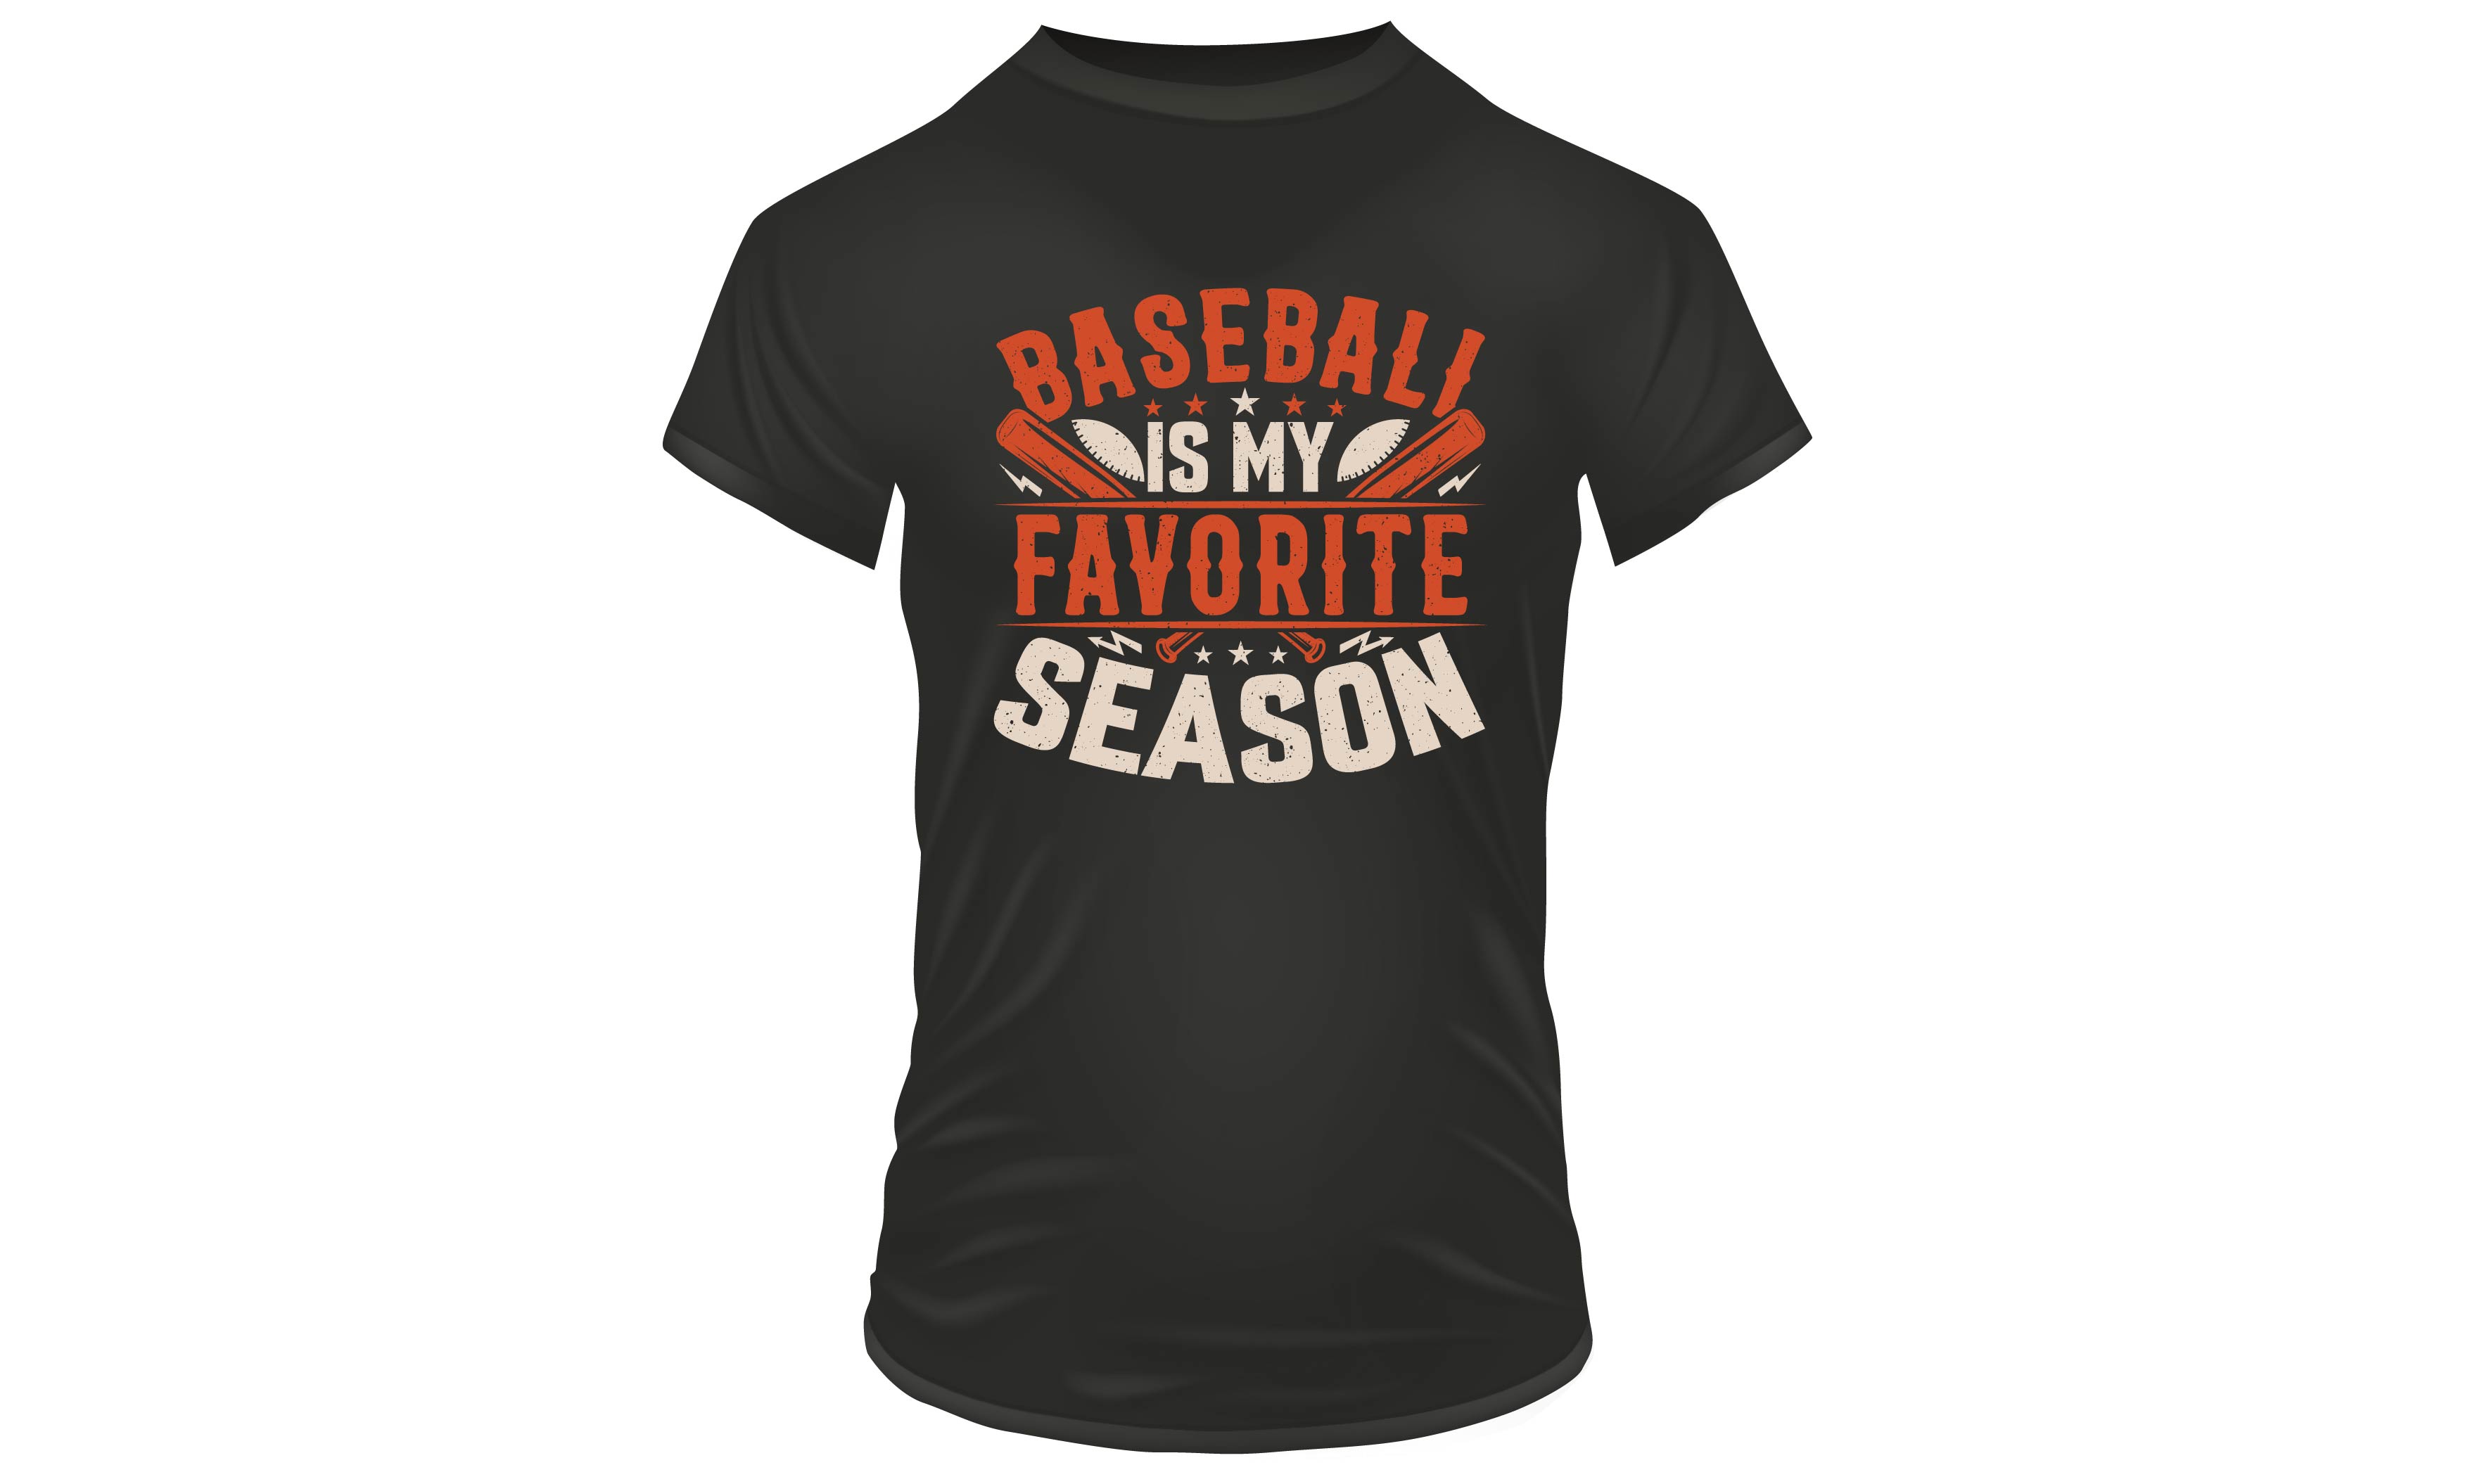 Black shirt that says baseball is my favorite season.